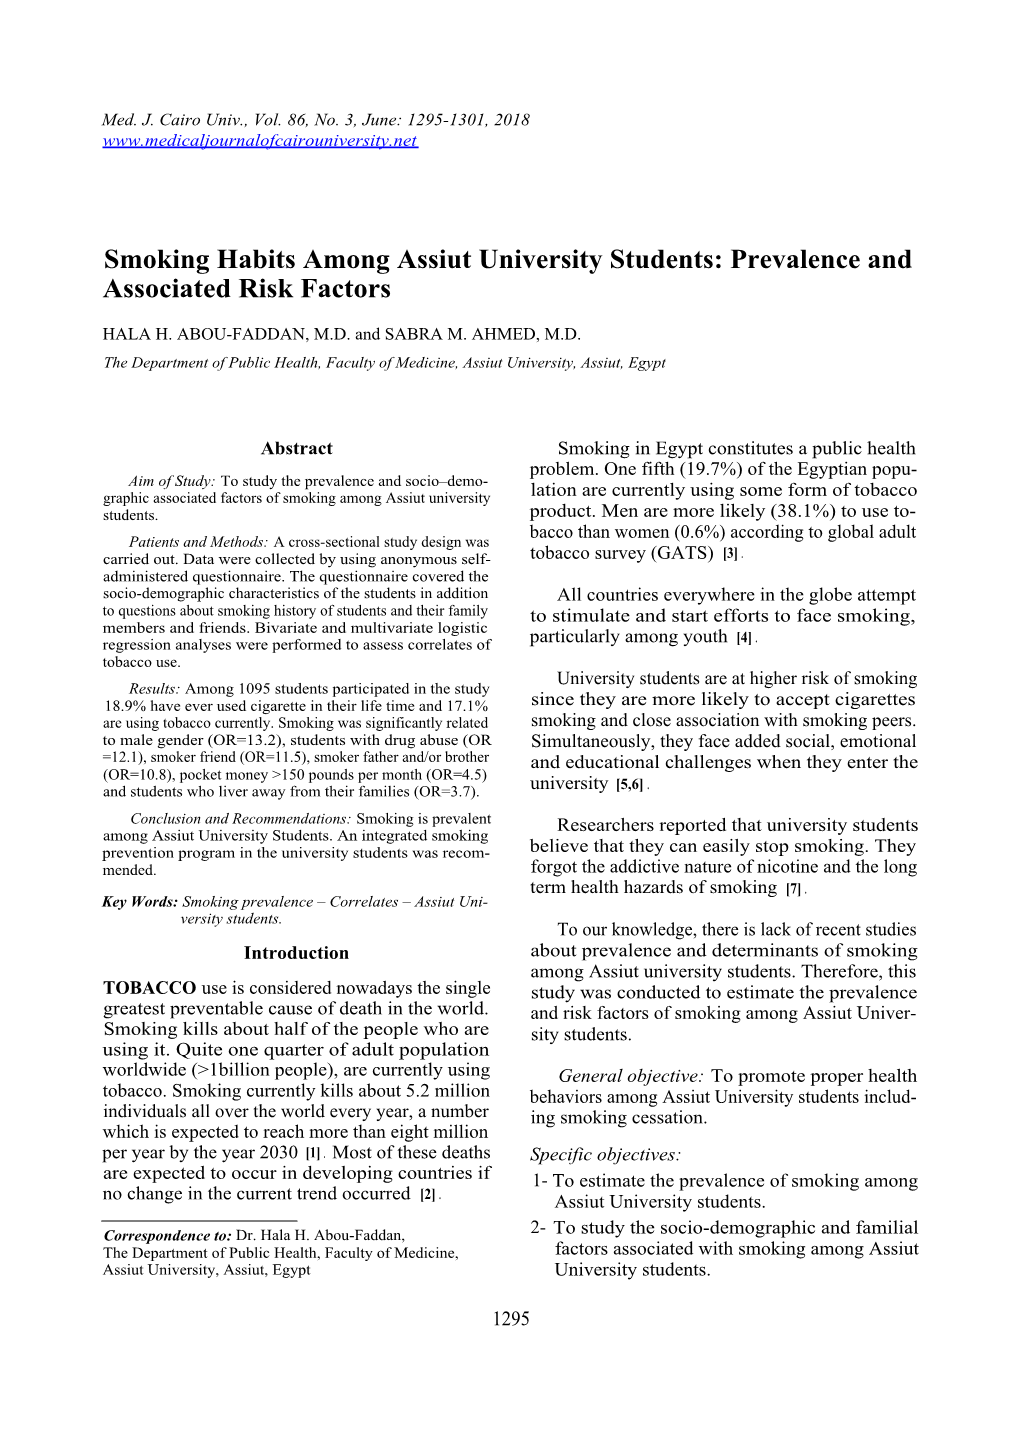 Smoking Habits Among Assiut University Students: Prevalence And